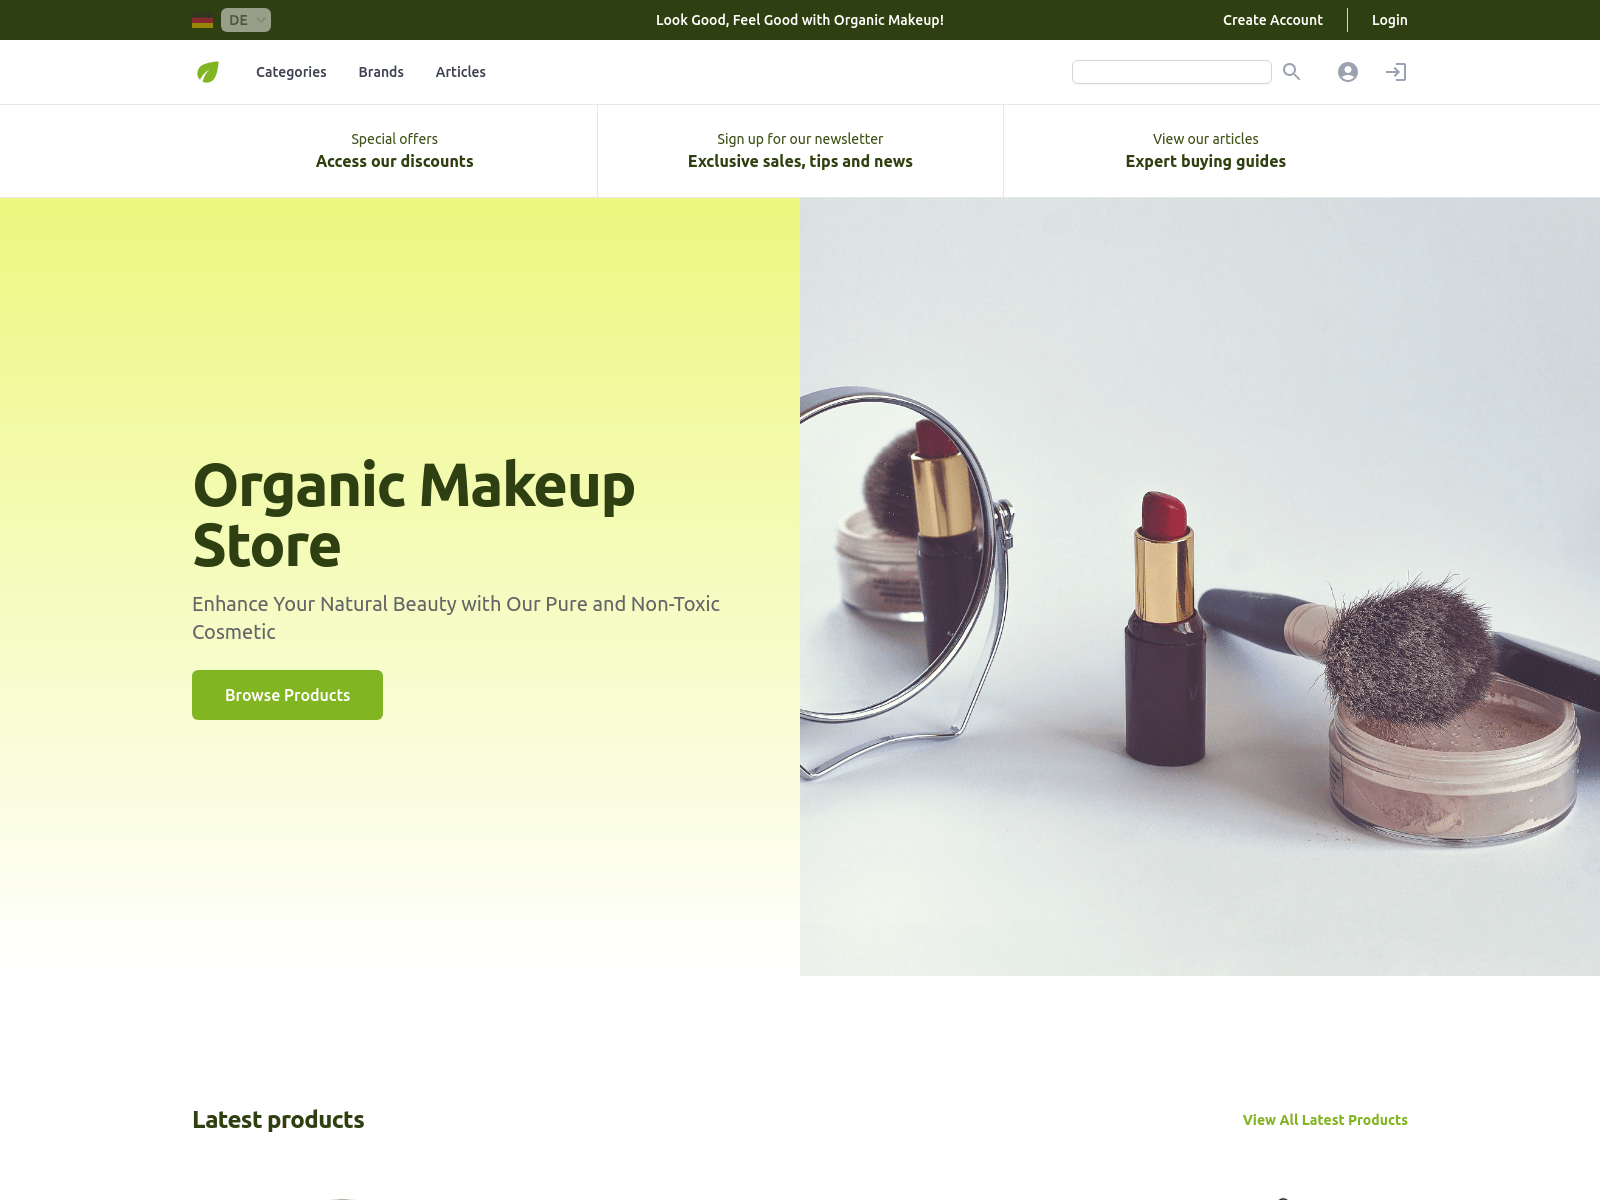 Organic Makeup Store screenshot